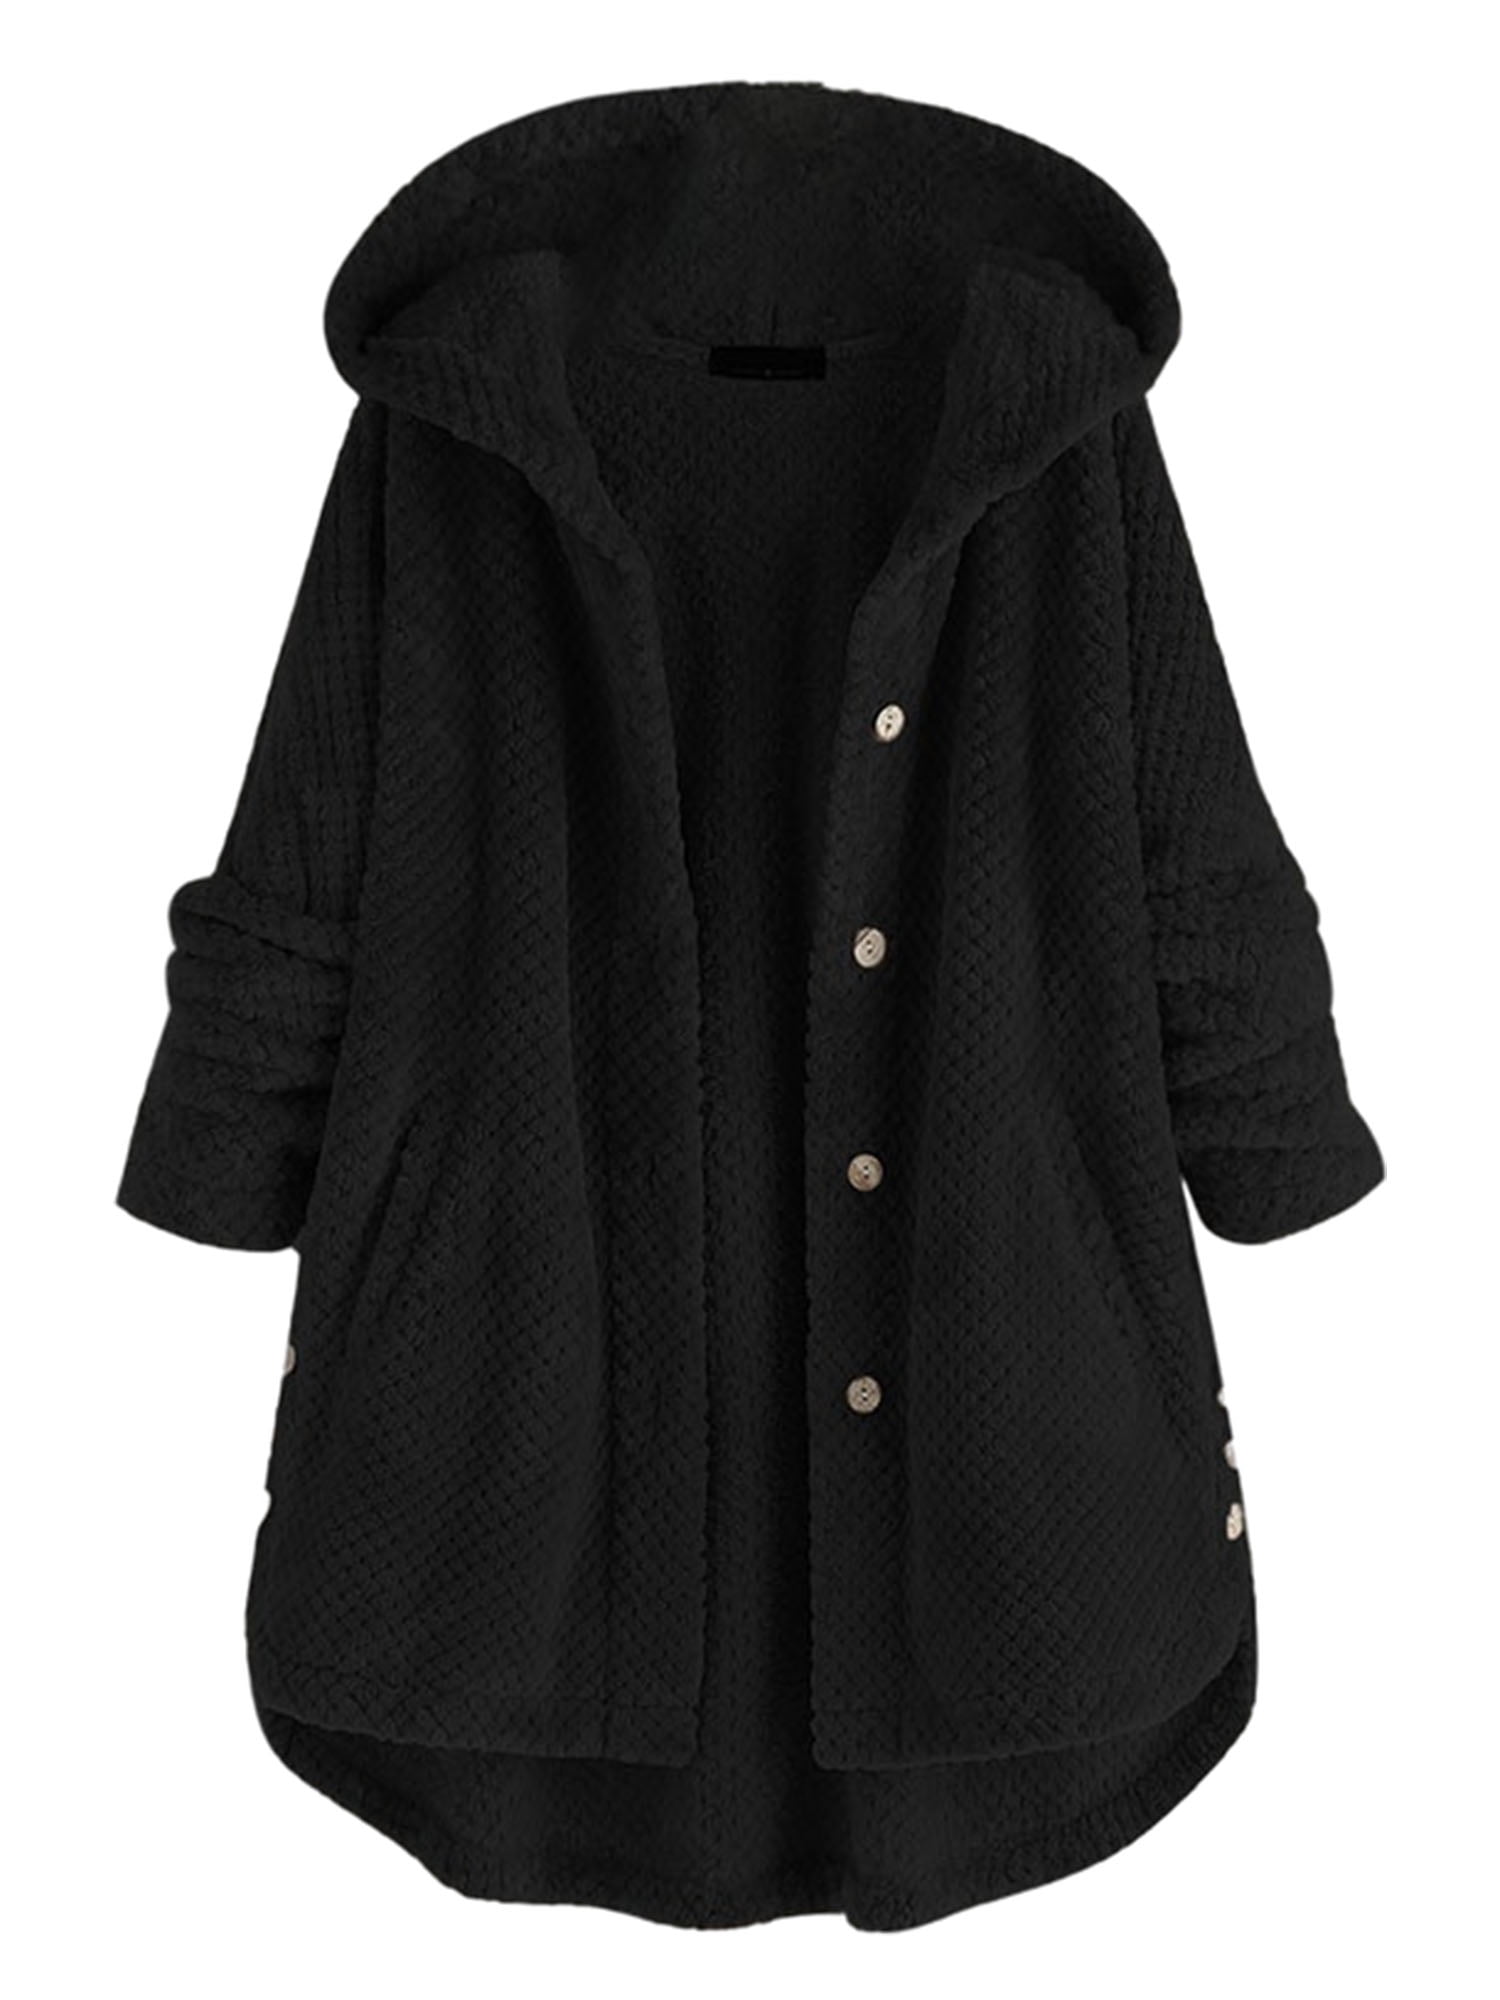 Women Hooded Overcoat Large Size Loose Ethnic Style Print Cardigan Coat Winter Warm Cozy Long Woolen Button Outwear